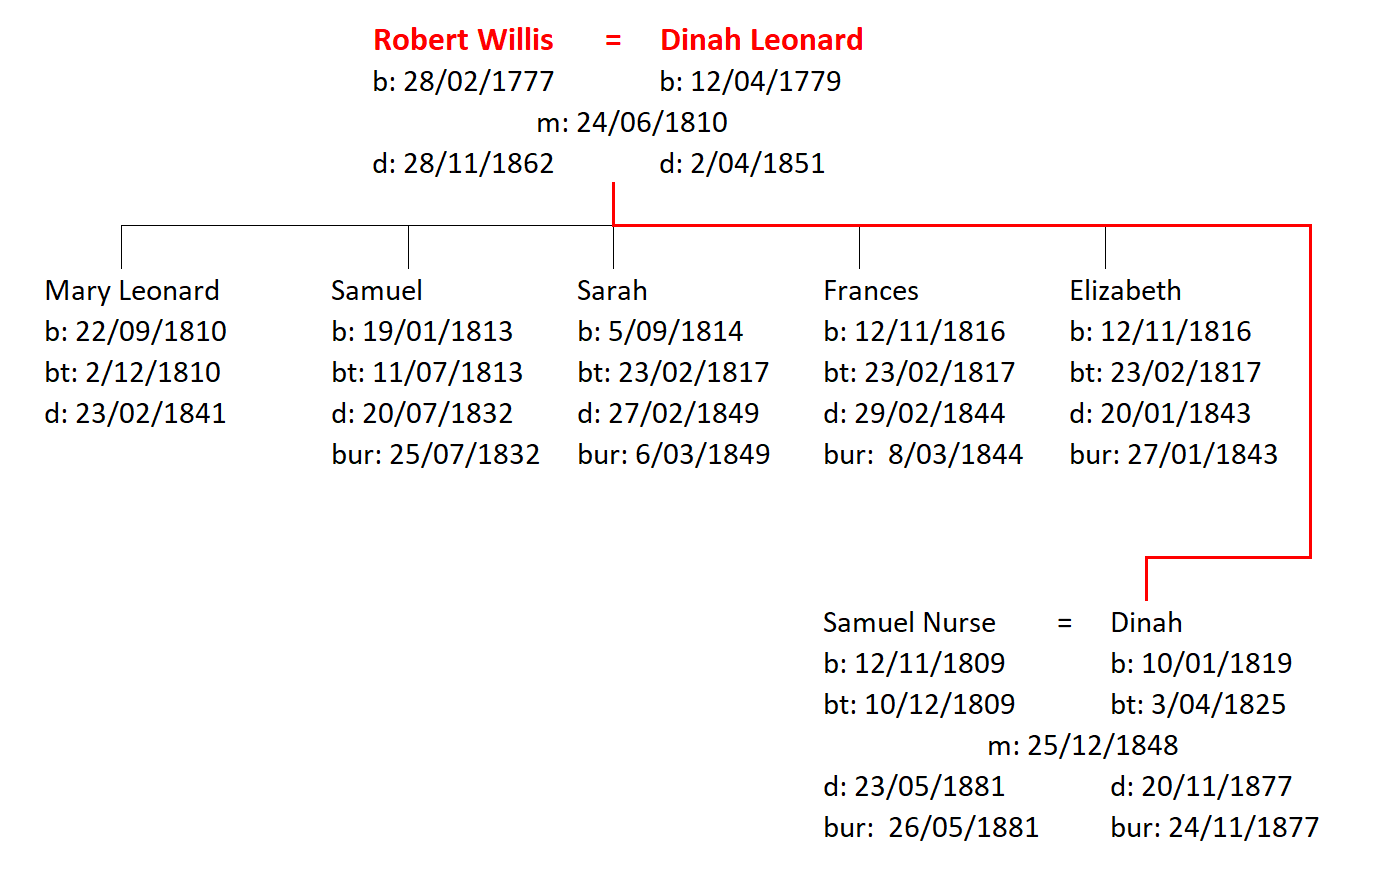 Figure 3: The Family of Robert and dinah Willis